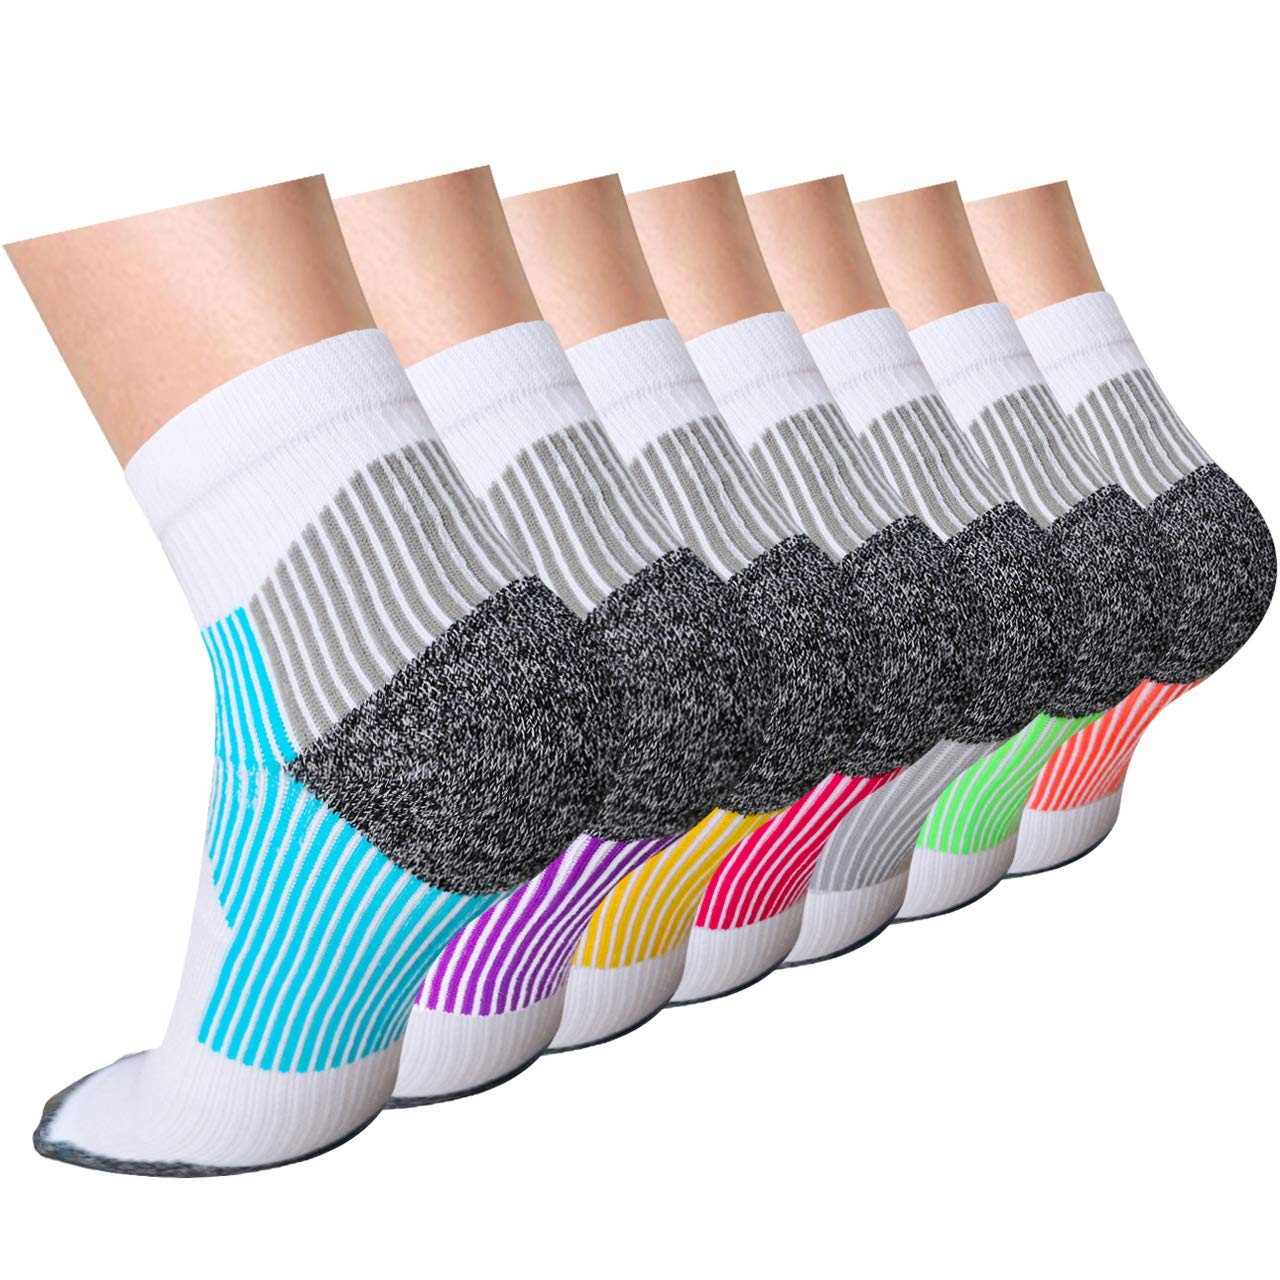 plantar fasciitis support socks